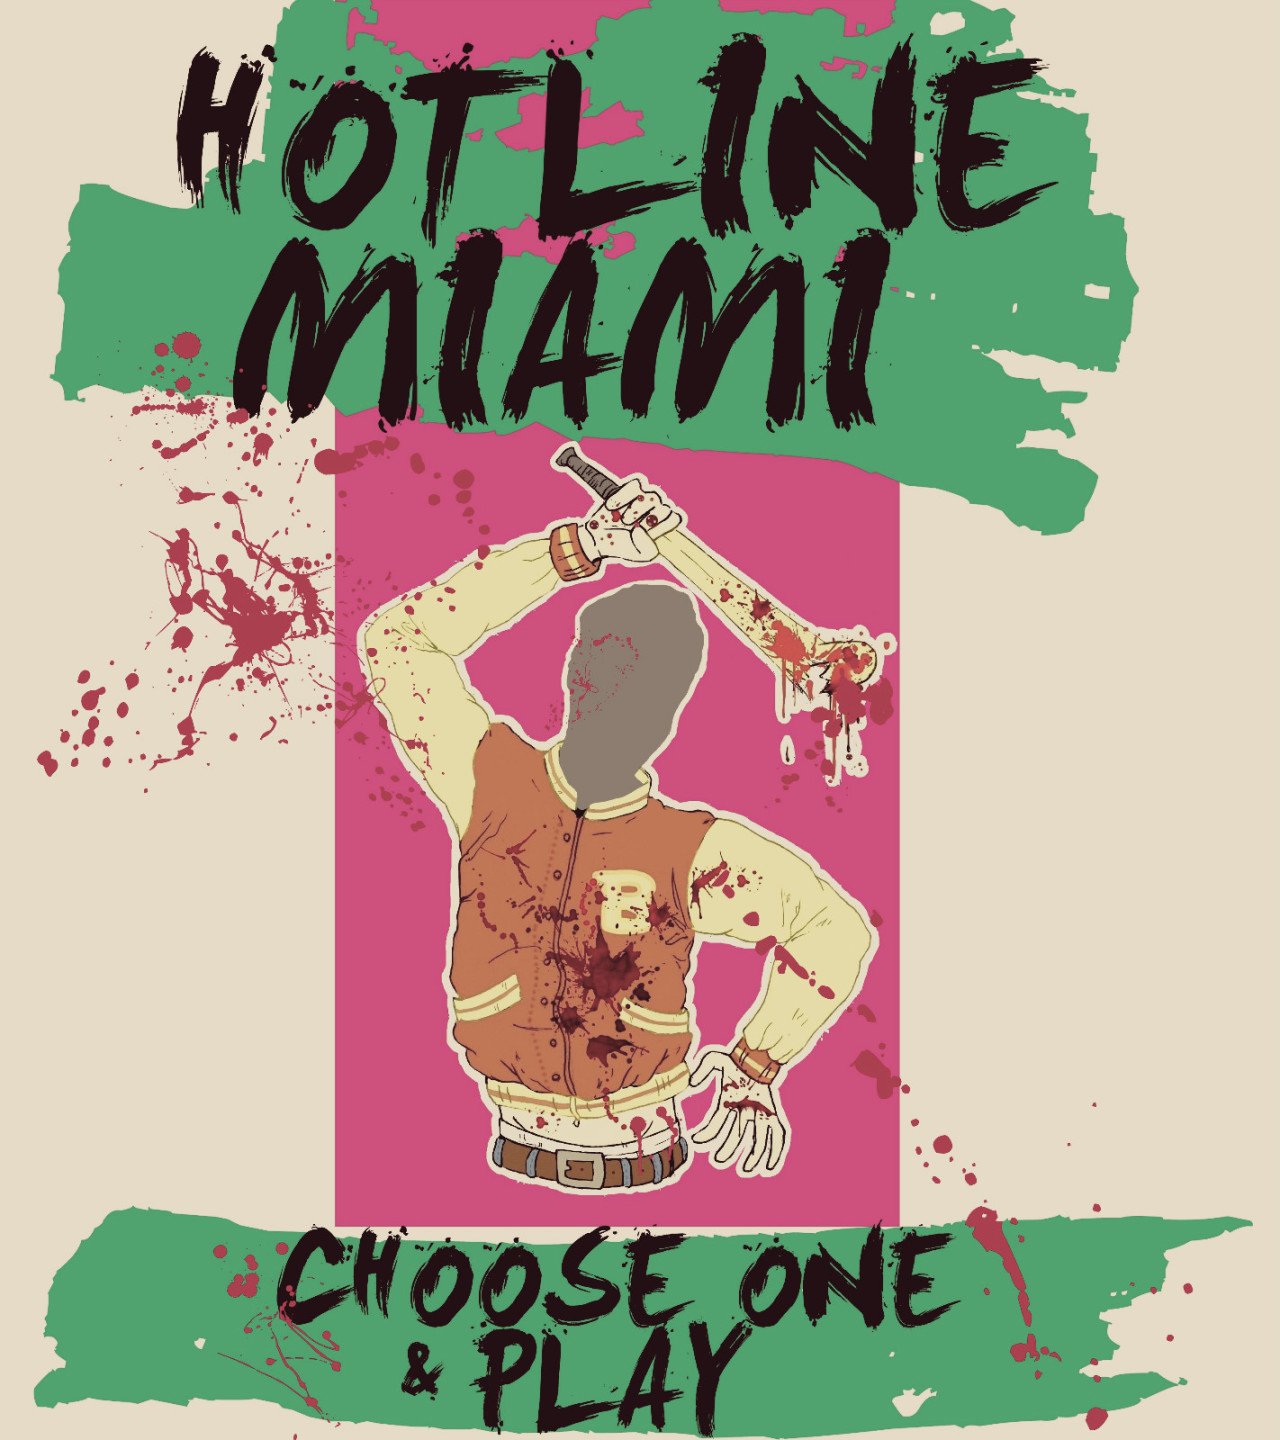 le-etruzka-fanart:  NEW - Hotline Miami “Choose one &amp; PLAY”  Visit my